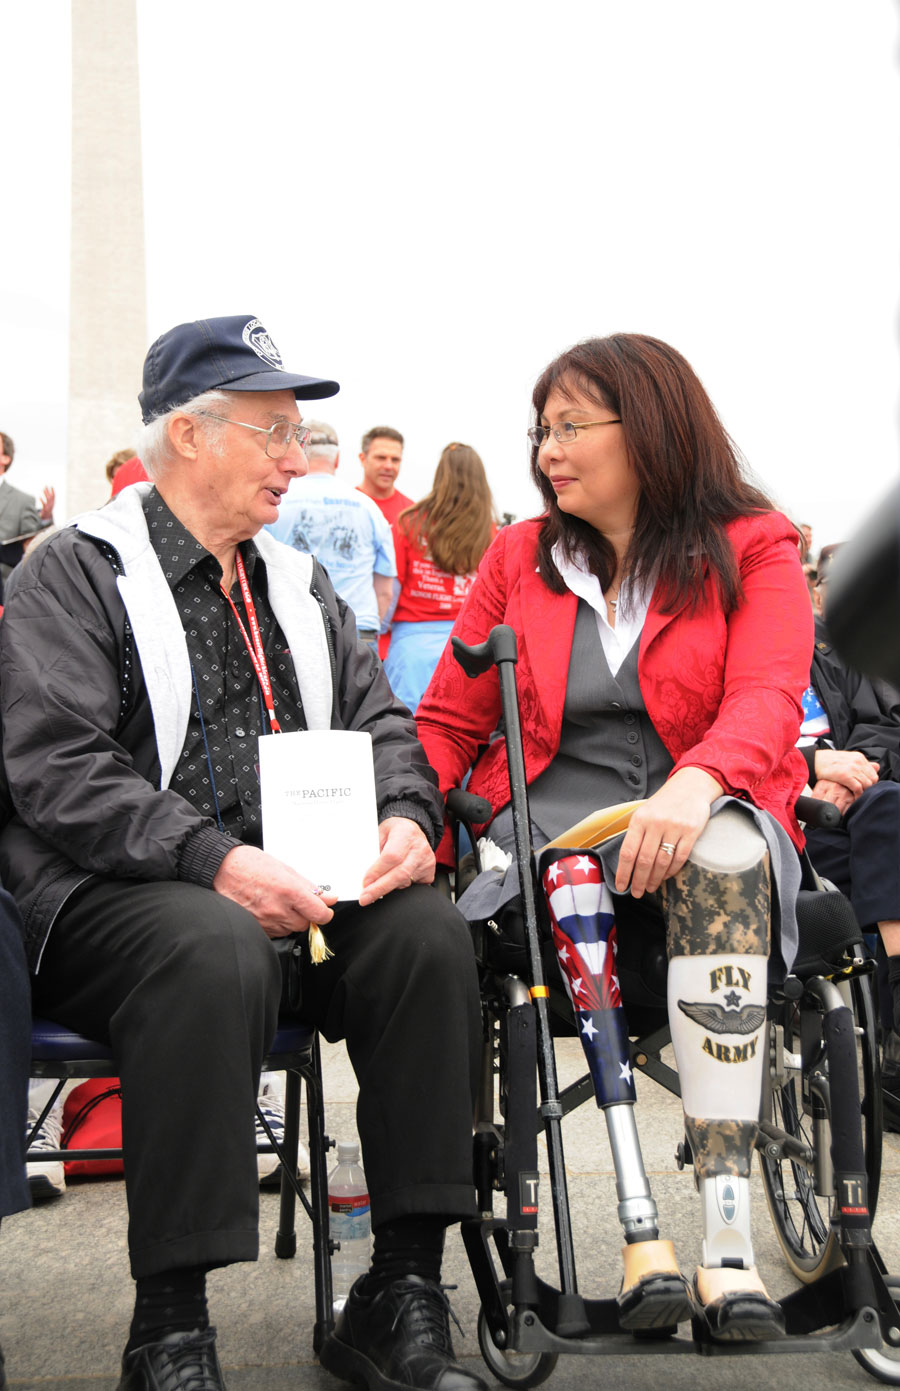 Tammy Duckworth assistant secretary of the Department of Veterans Affairs, shares conversation with World War II veteran